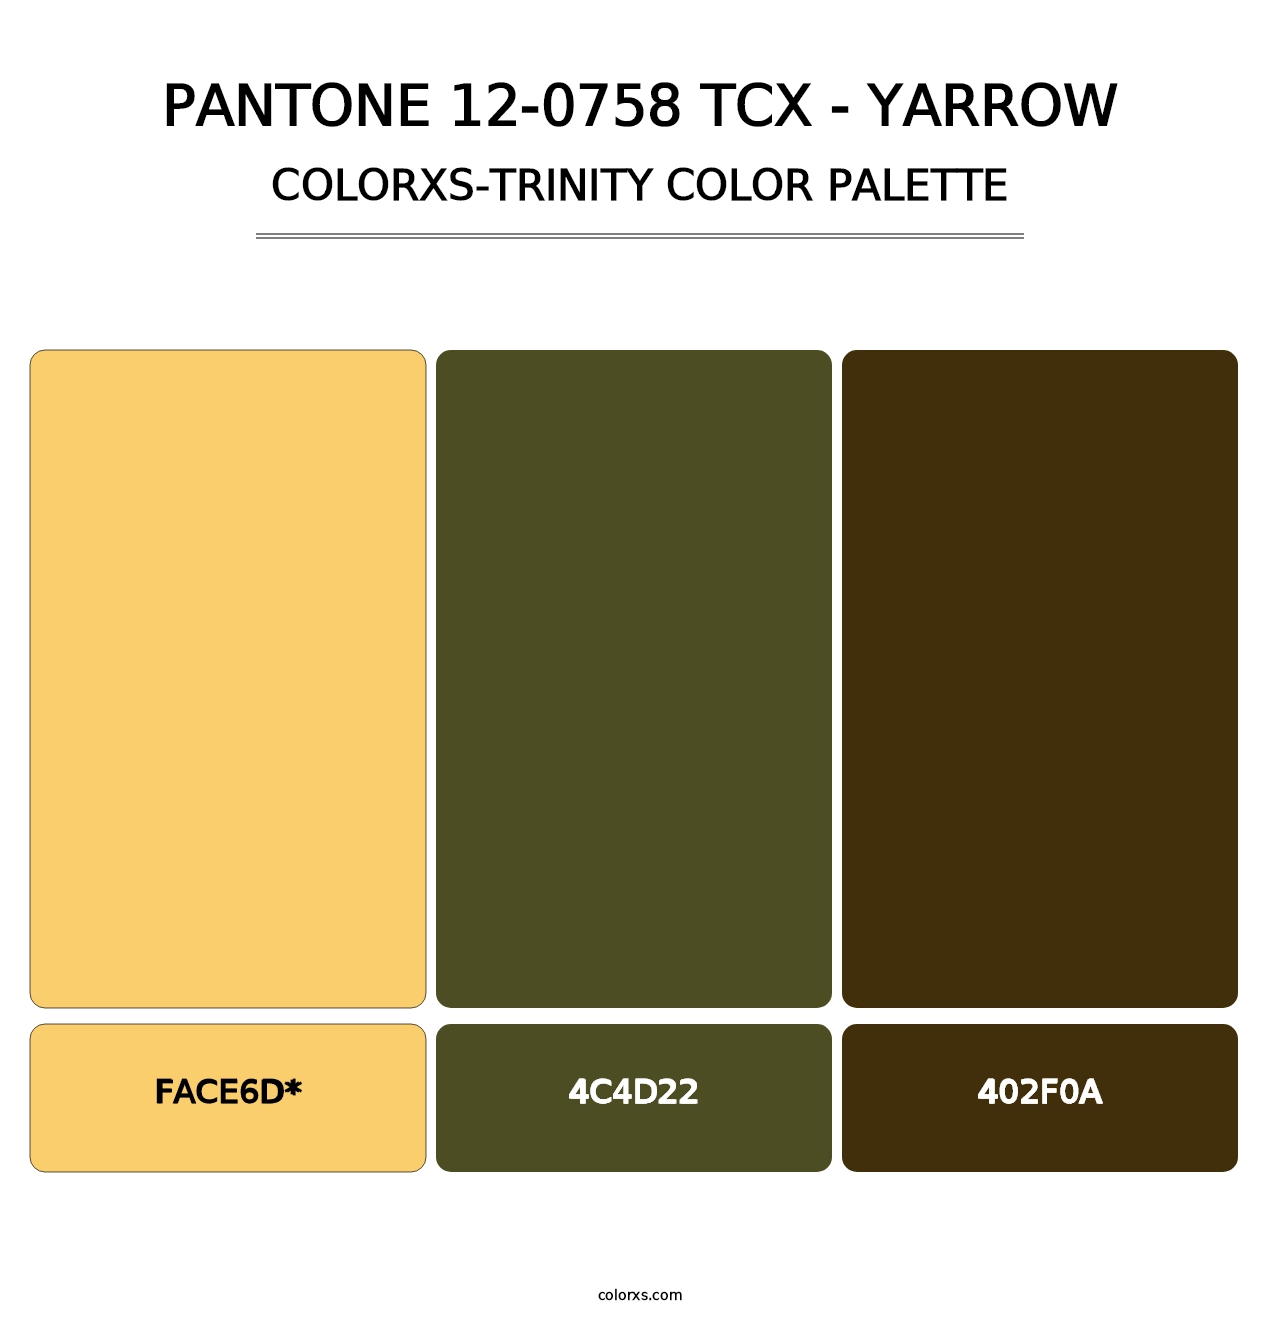 PANTONE 12-0758 TCX - Yarrow - Colorxs Trinity Palette